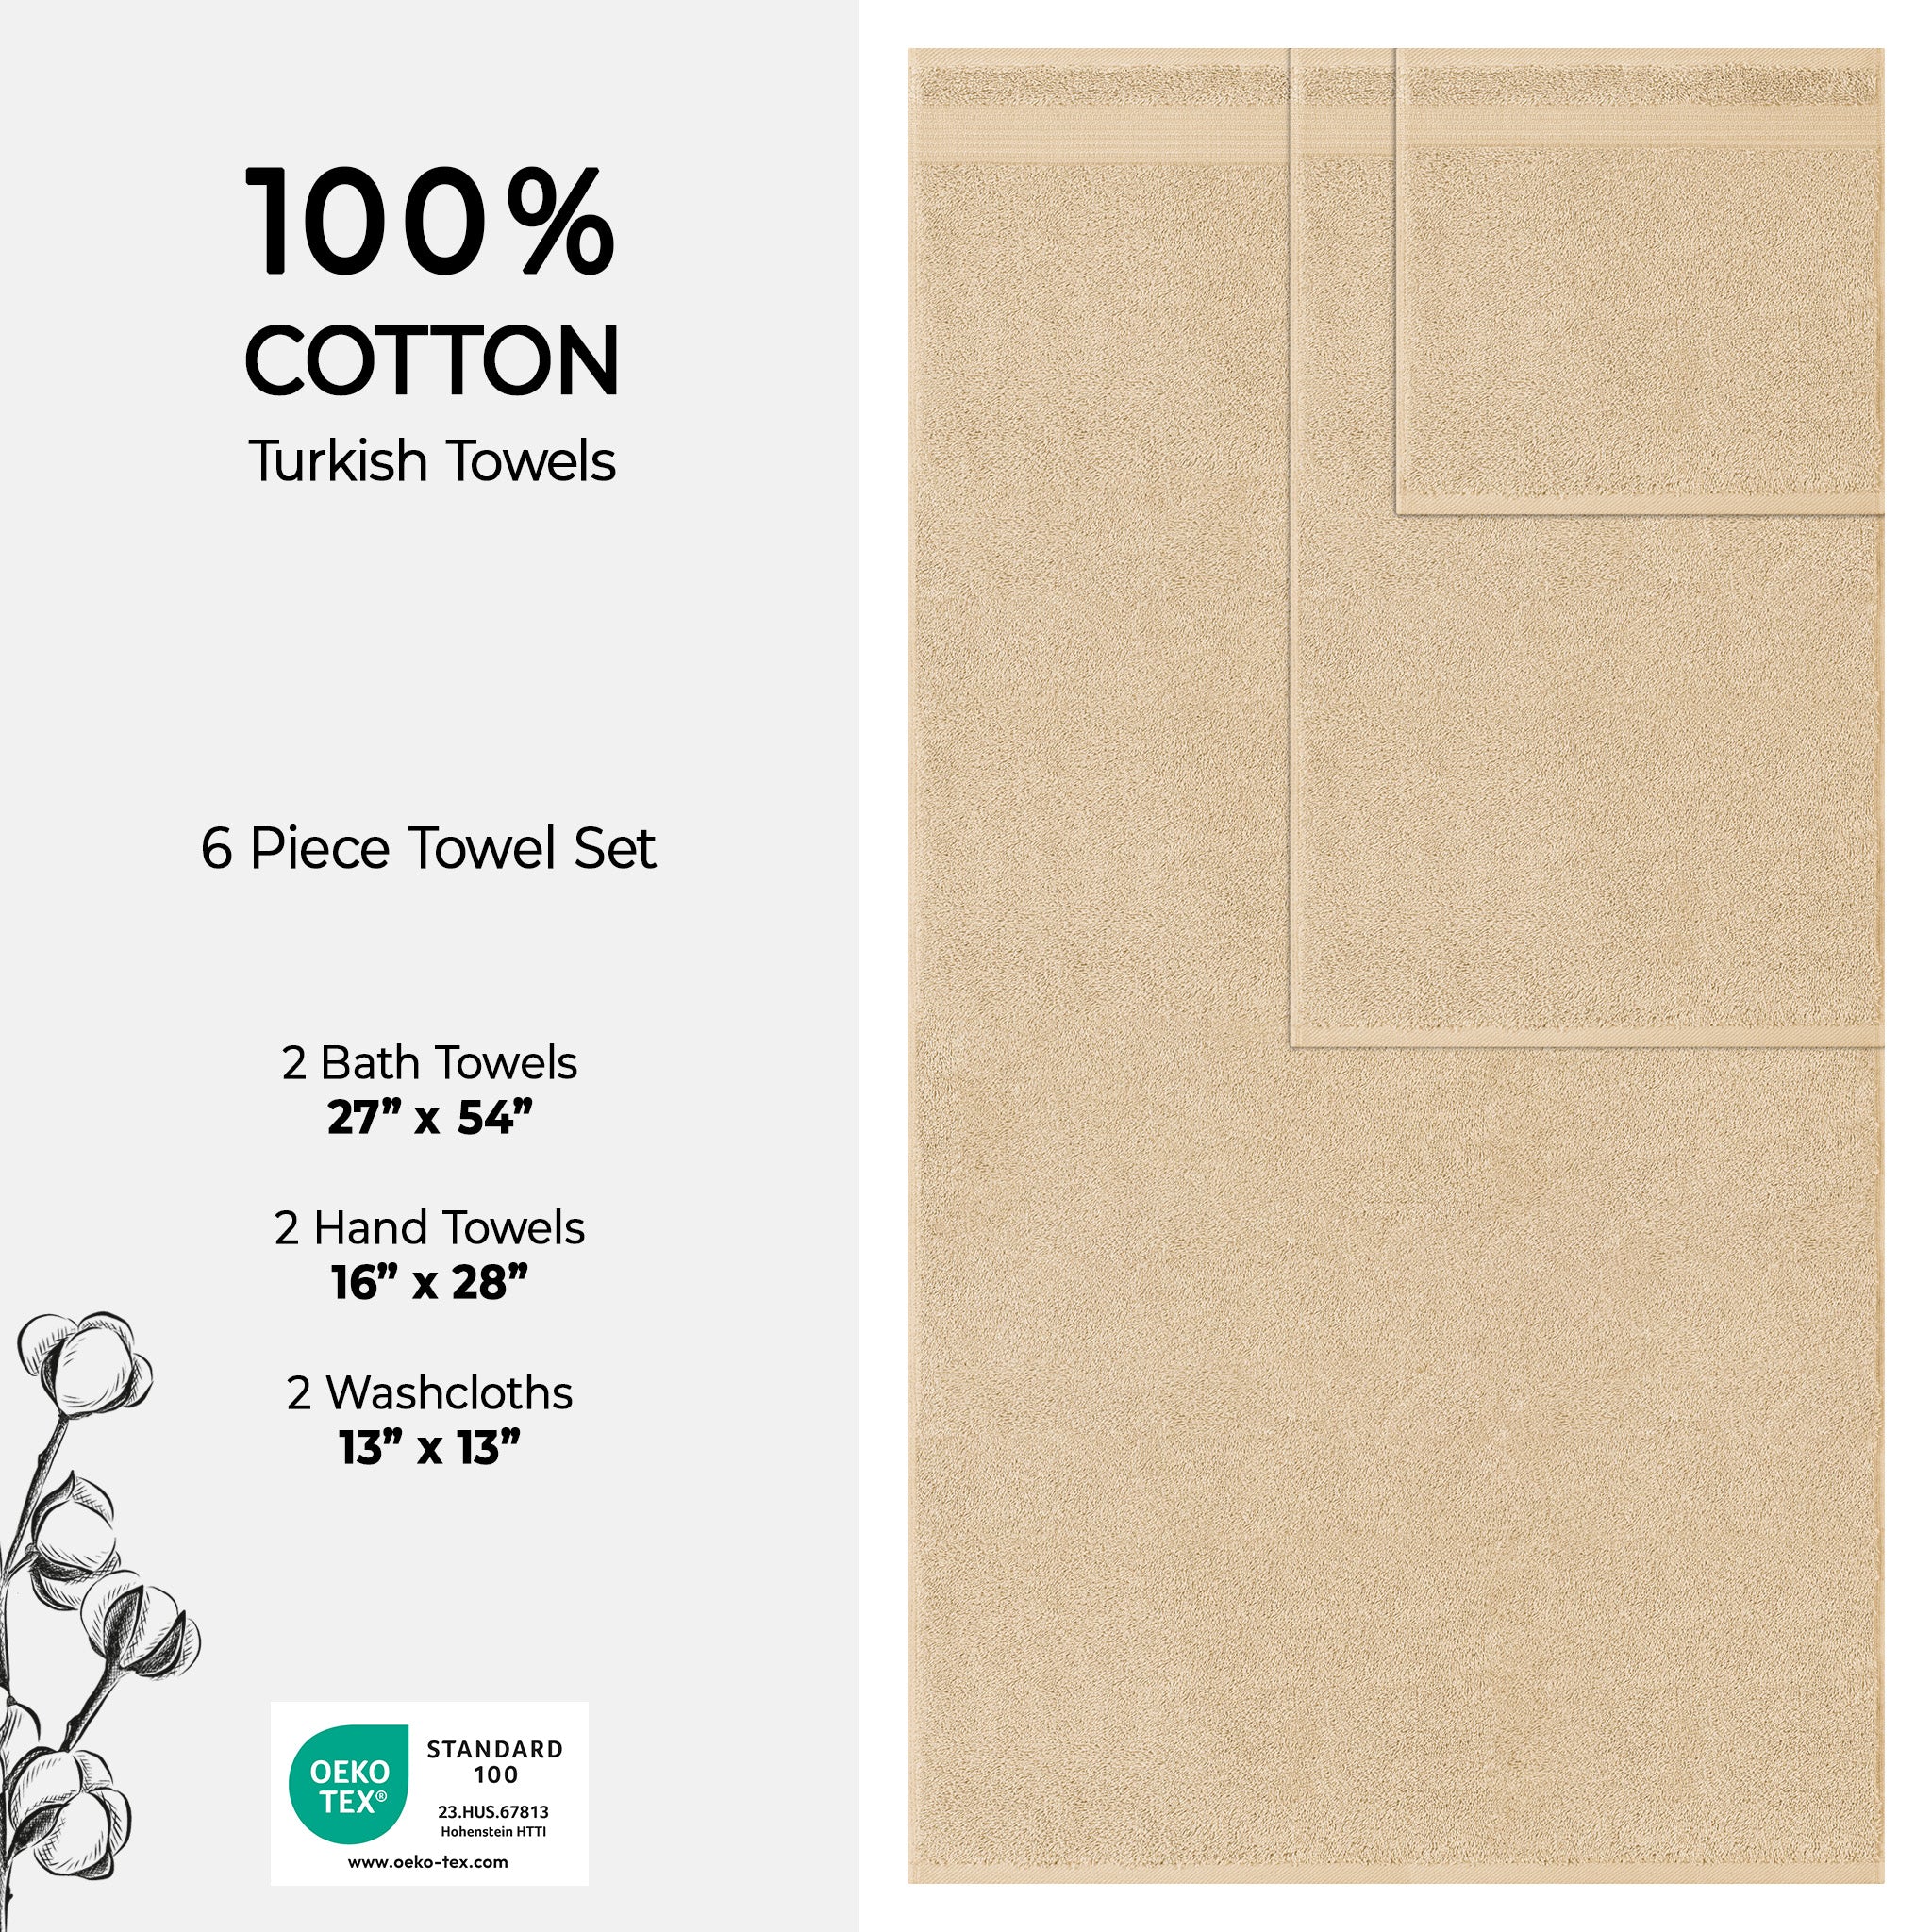 American Soft Linen Bekos 100% Cotton Turkish Towels 6 Piece Bath Towel Set -sand-taupe-04